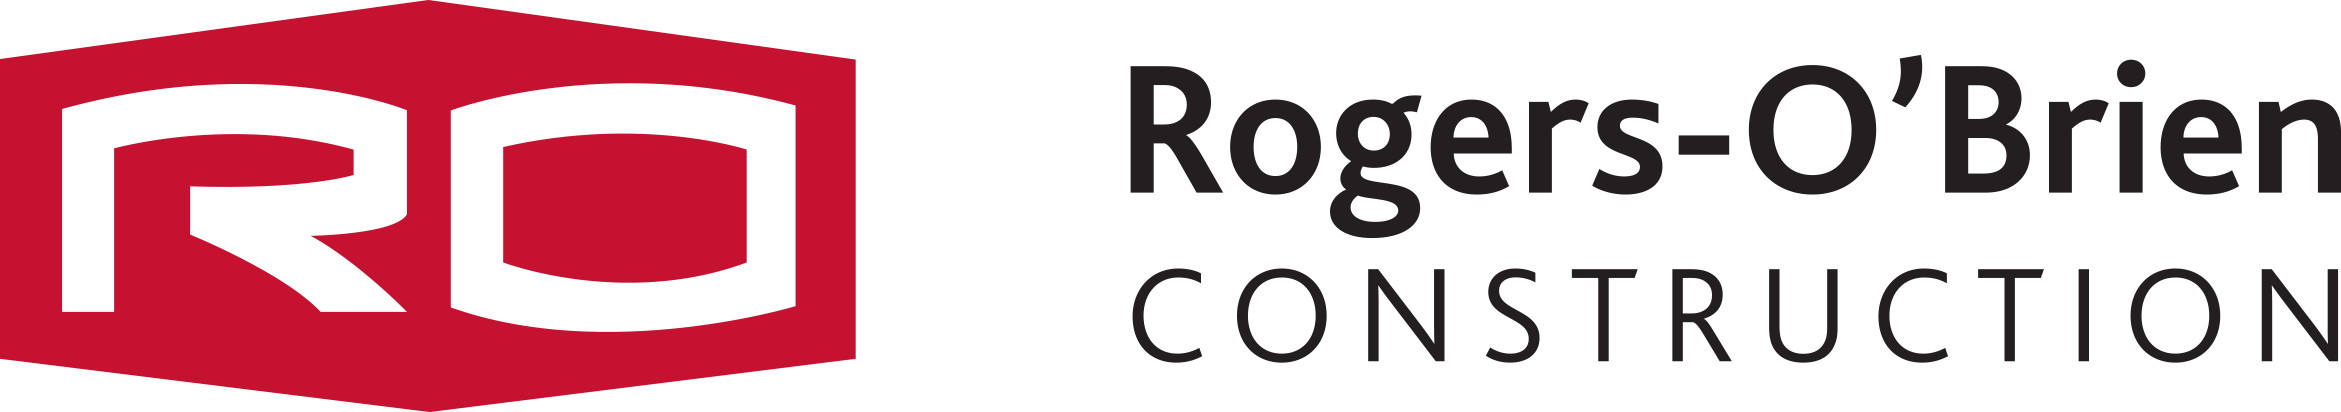 Rogers-O'Brien logo